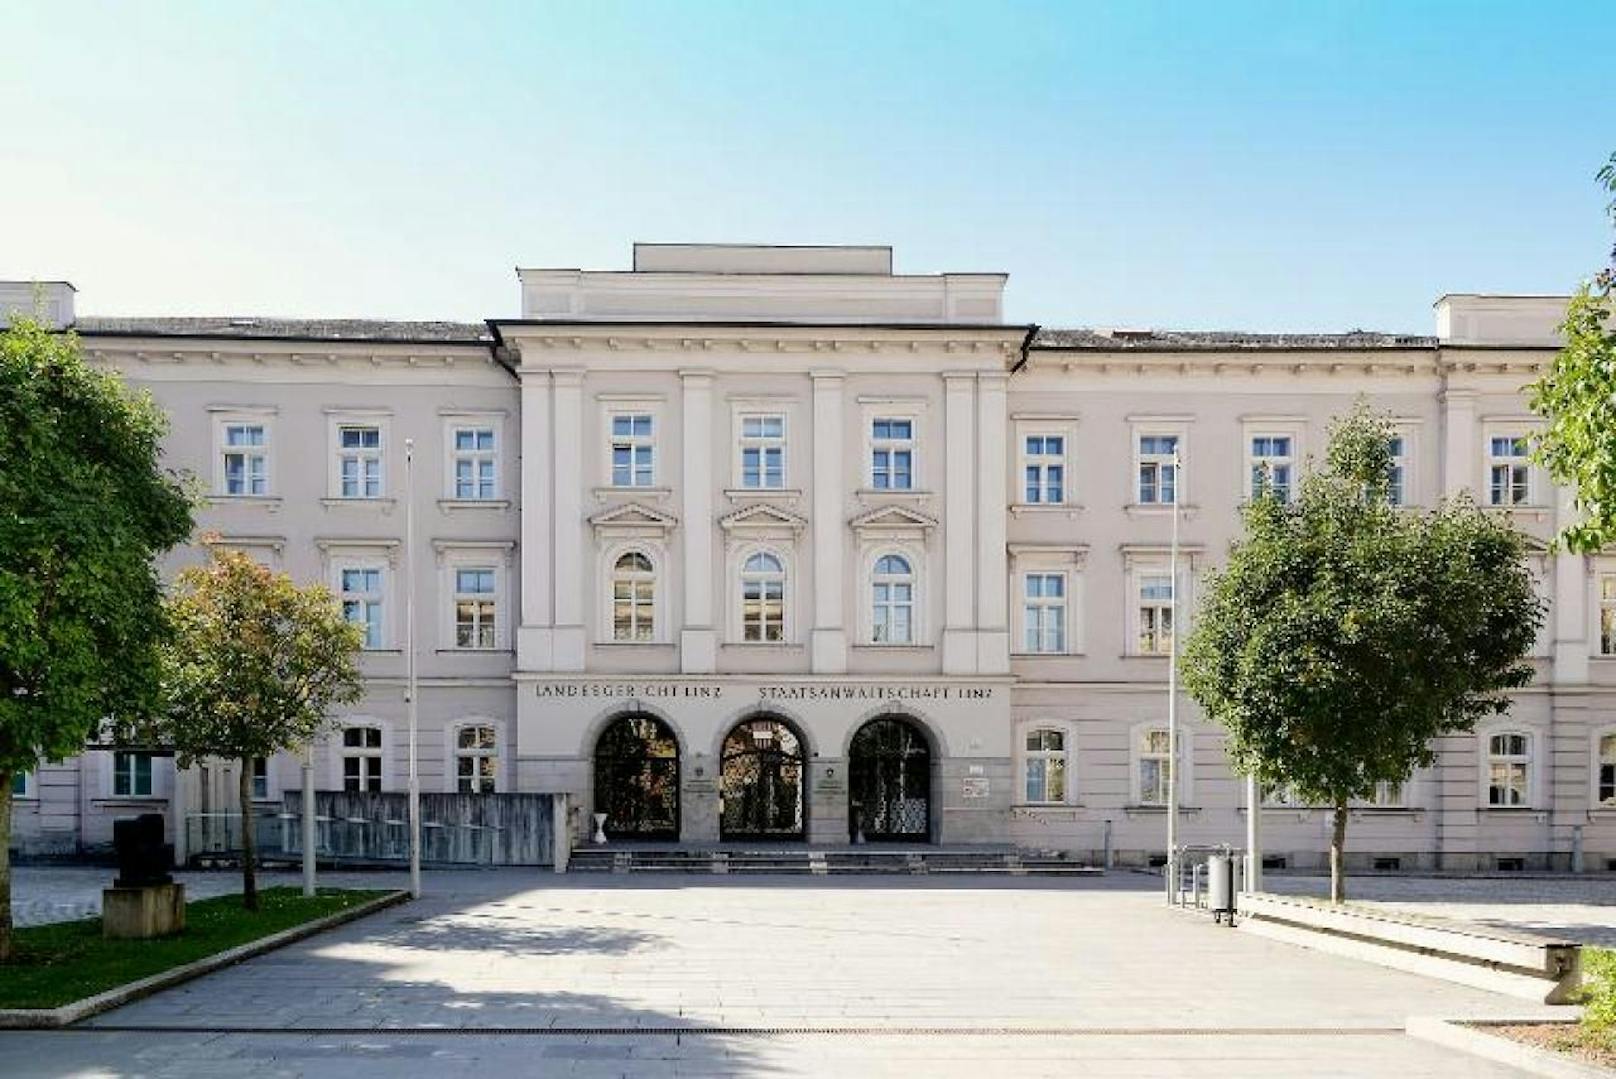 Dem Beschuldigten drohen vor Gericht in Linz zehn Jahre Haft.